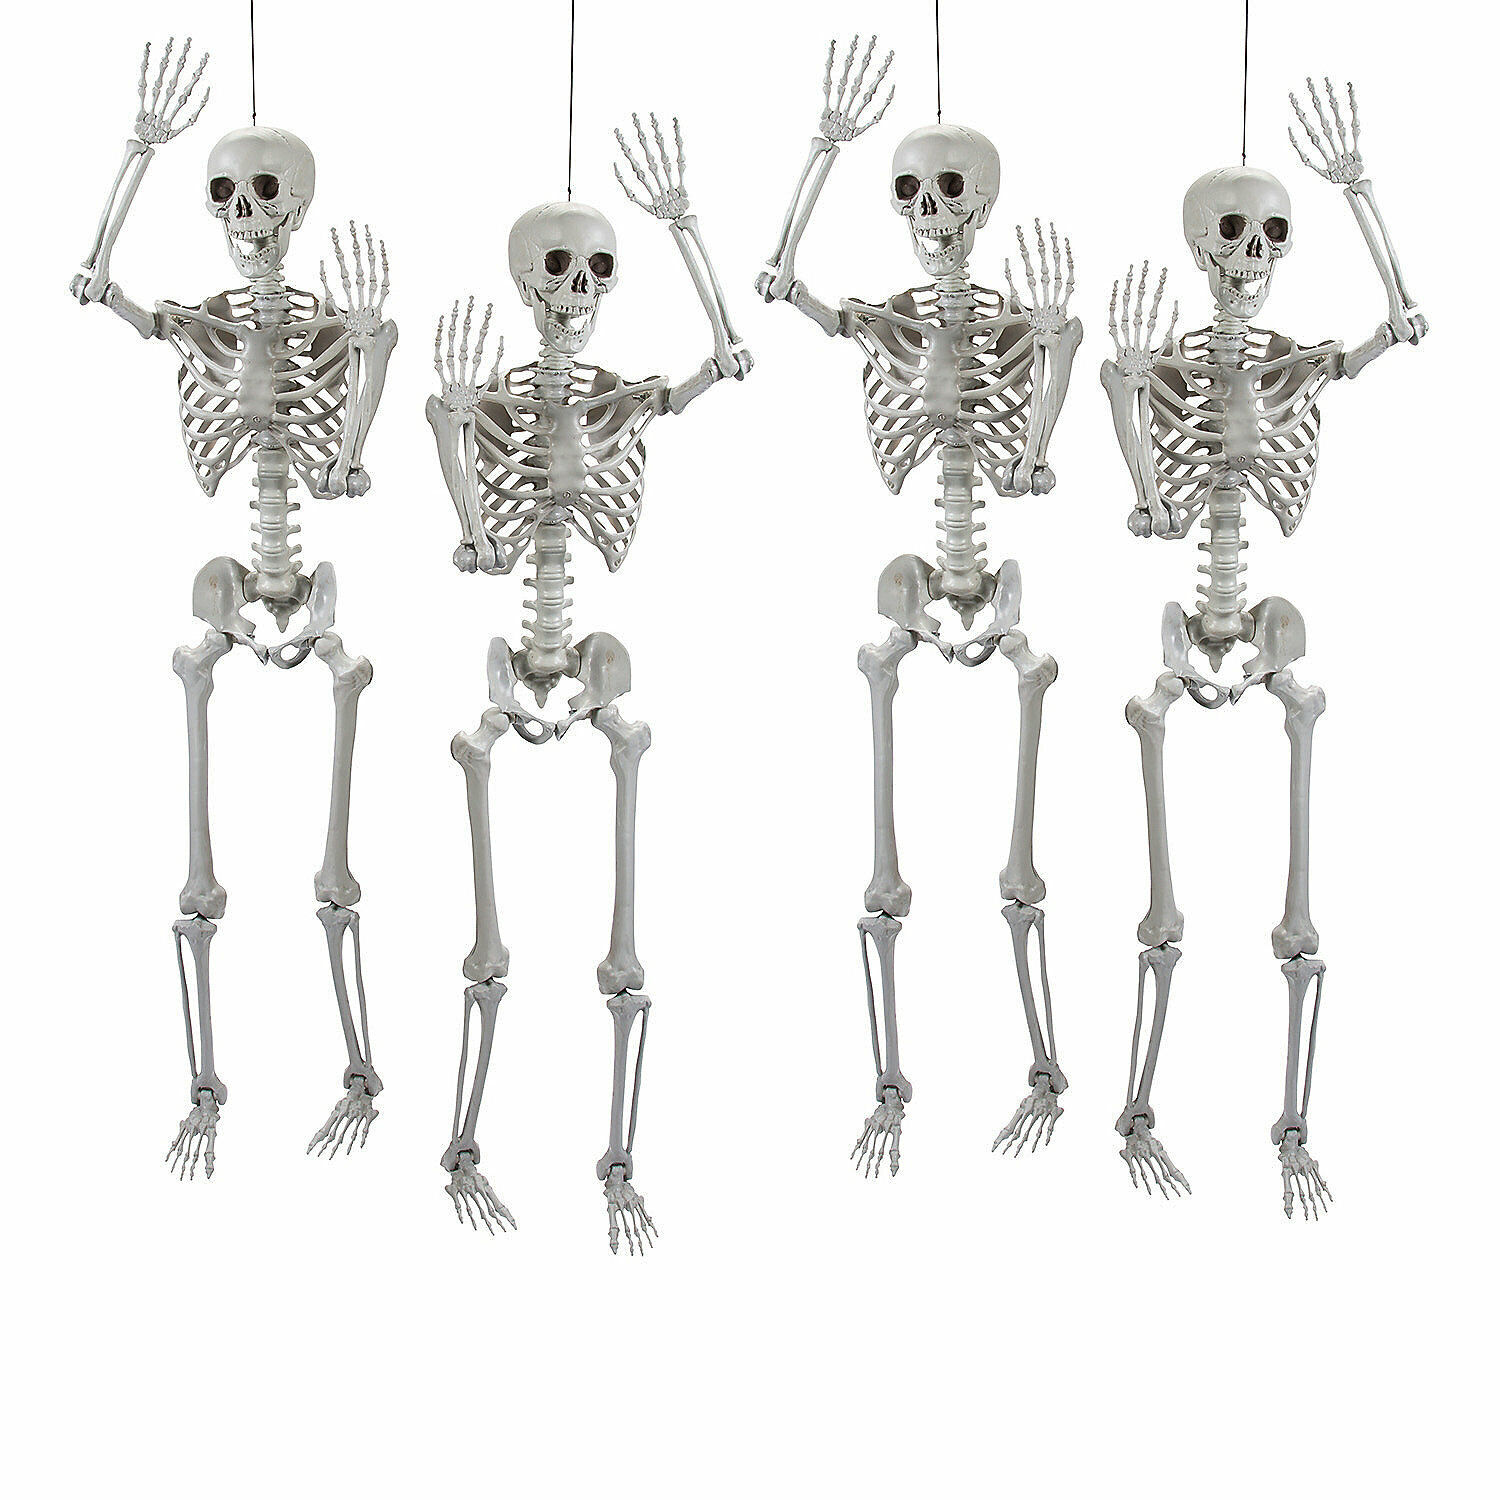 Life Size Posable Skeleton Halloween Decorations - Home Decor - 4 Pieces